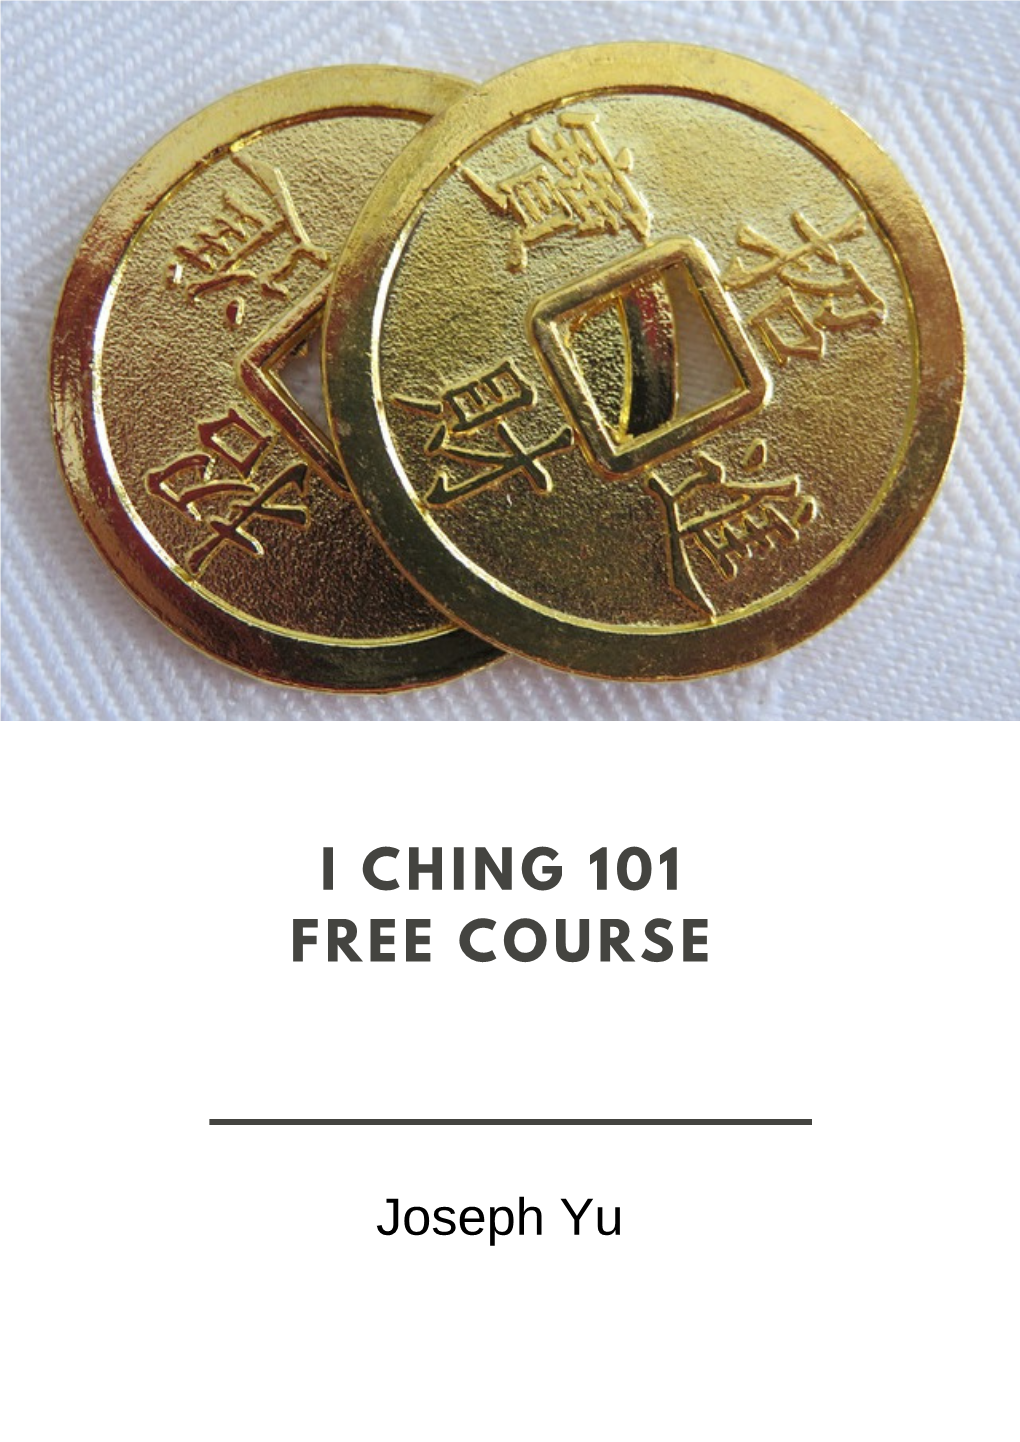 Joseph Yu I CHING 101 FREE COURSE